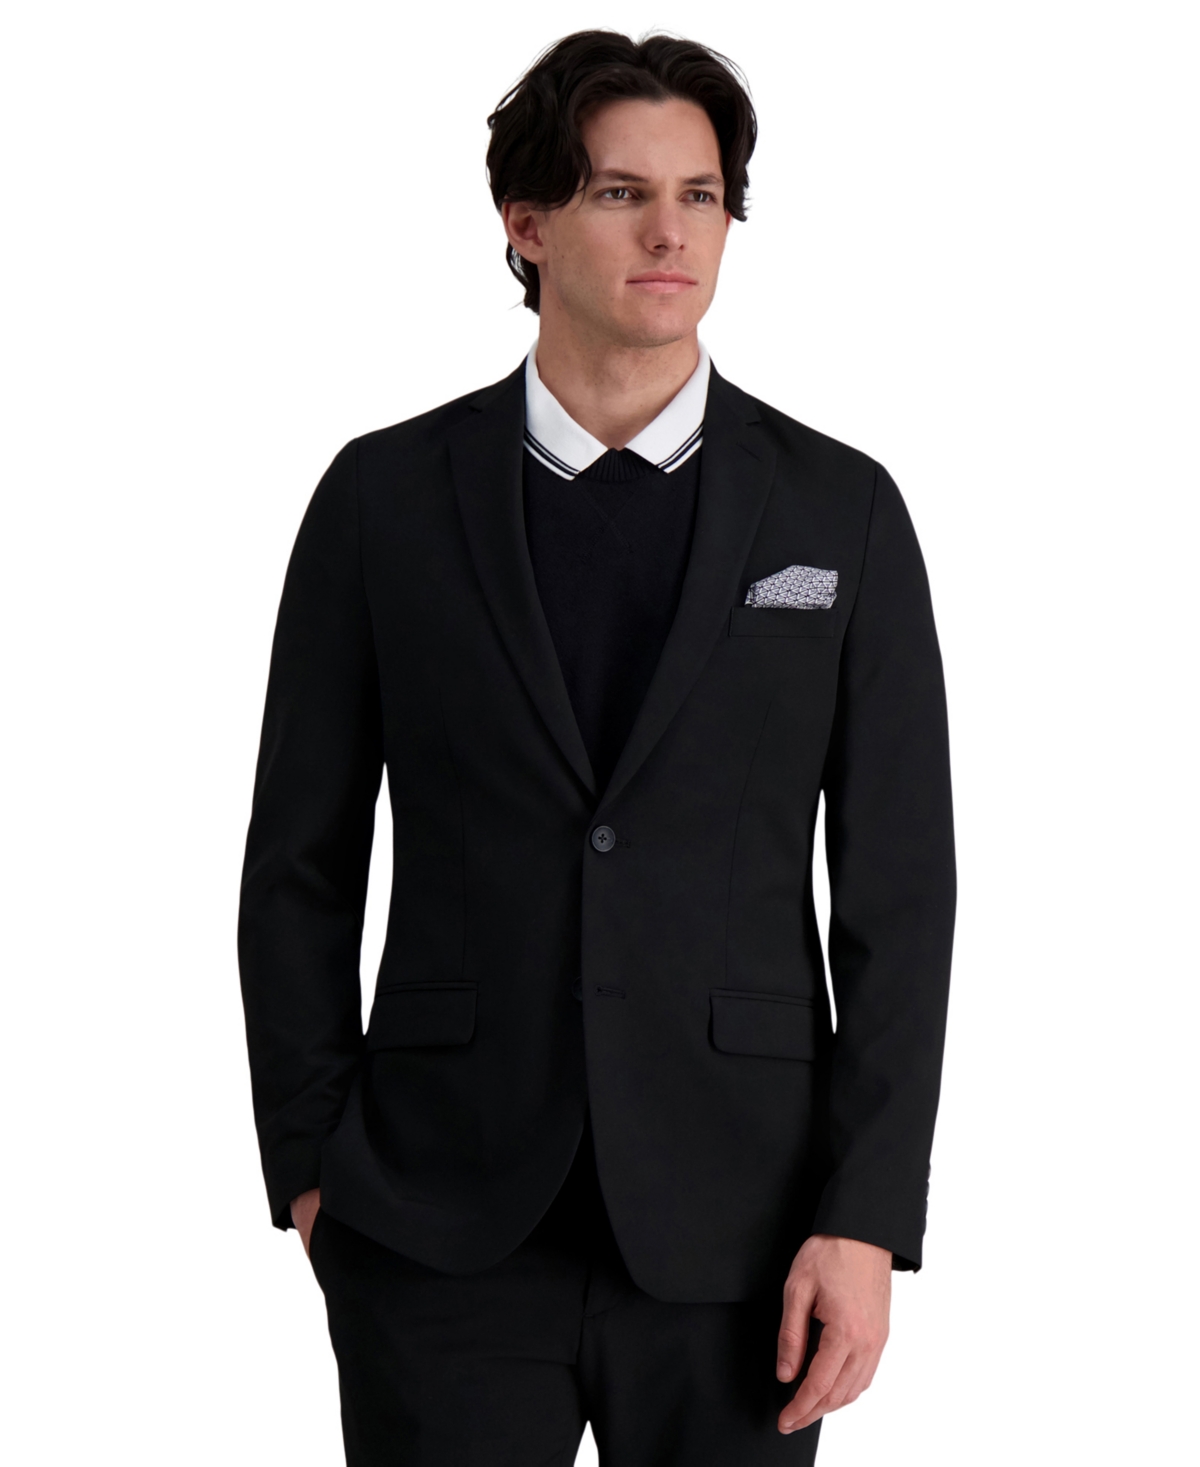 J.m Haggar Men's Slim-Fit 4-Way Stretch Suit Jacket - Black